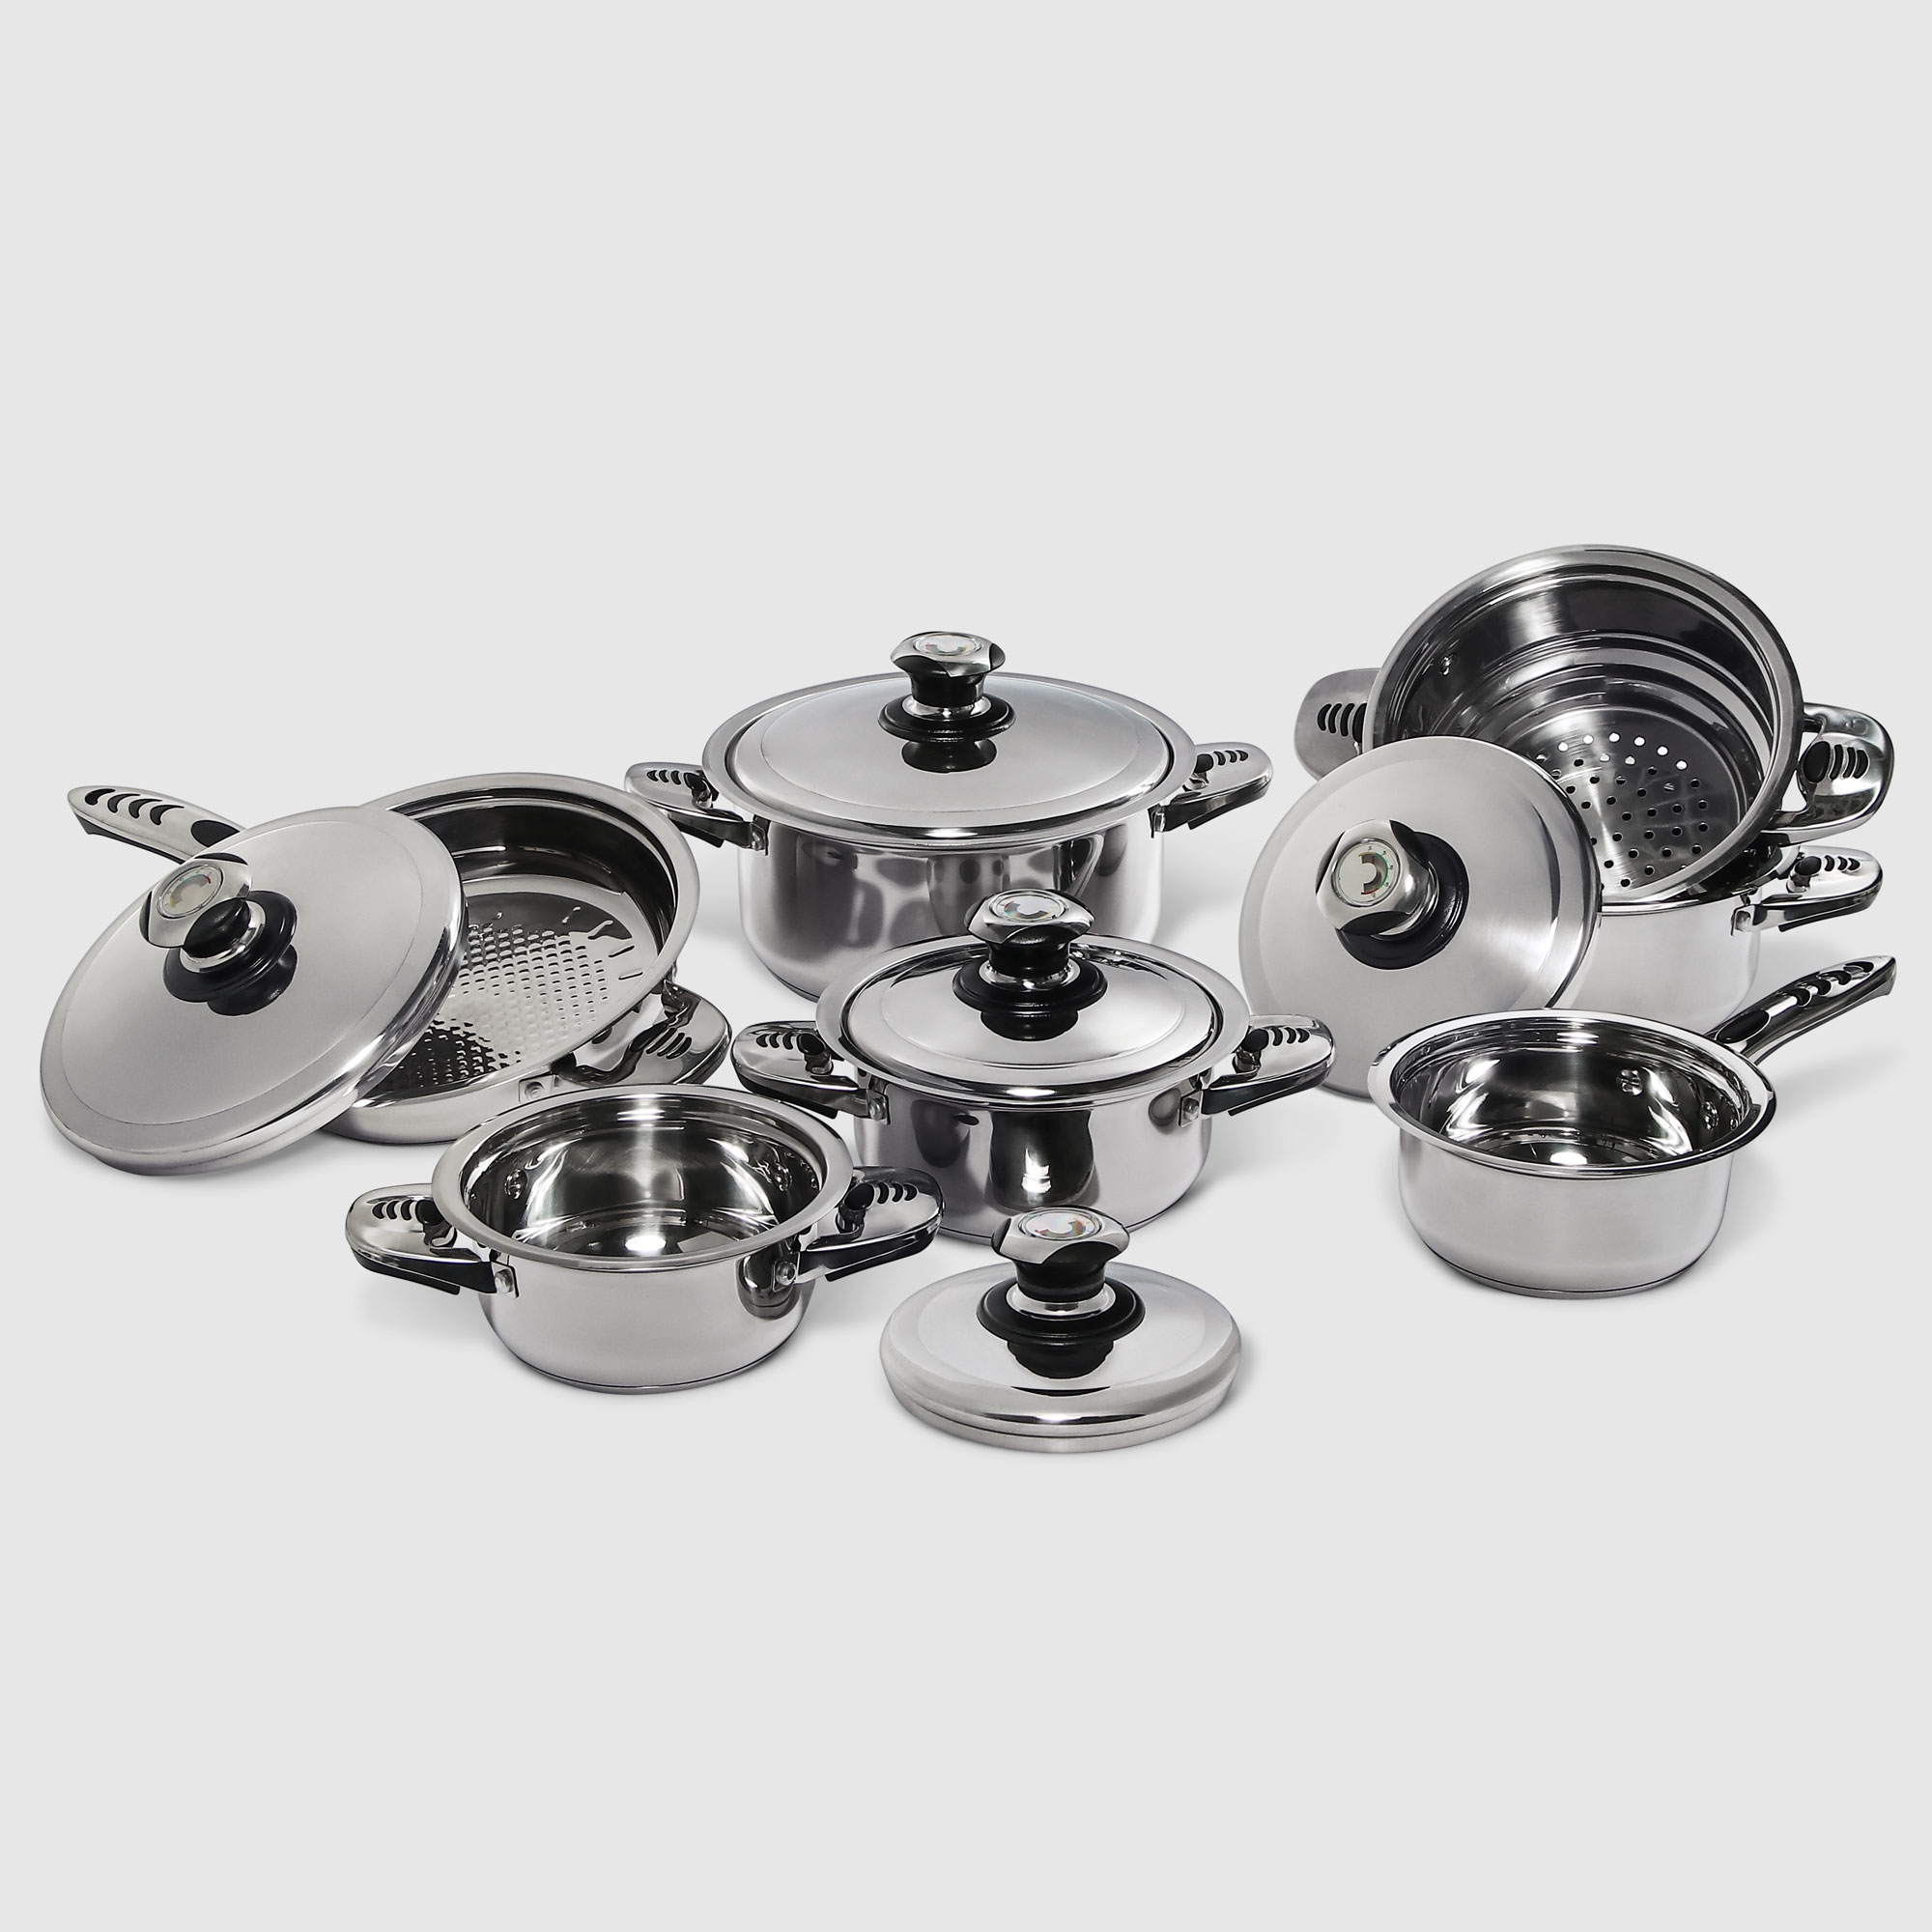 Набор посуды Vantage 12 предметов (E11202) набор посуды vantage 12 предметов e11202